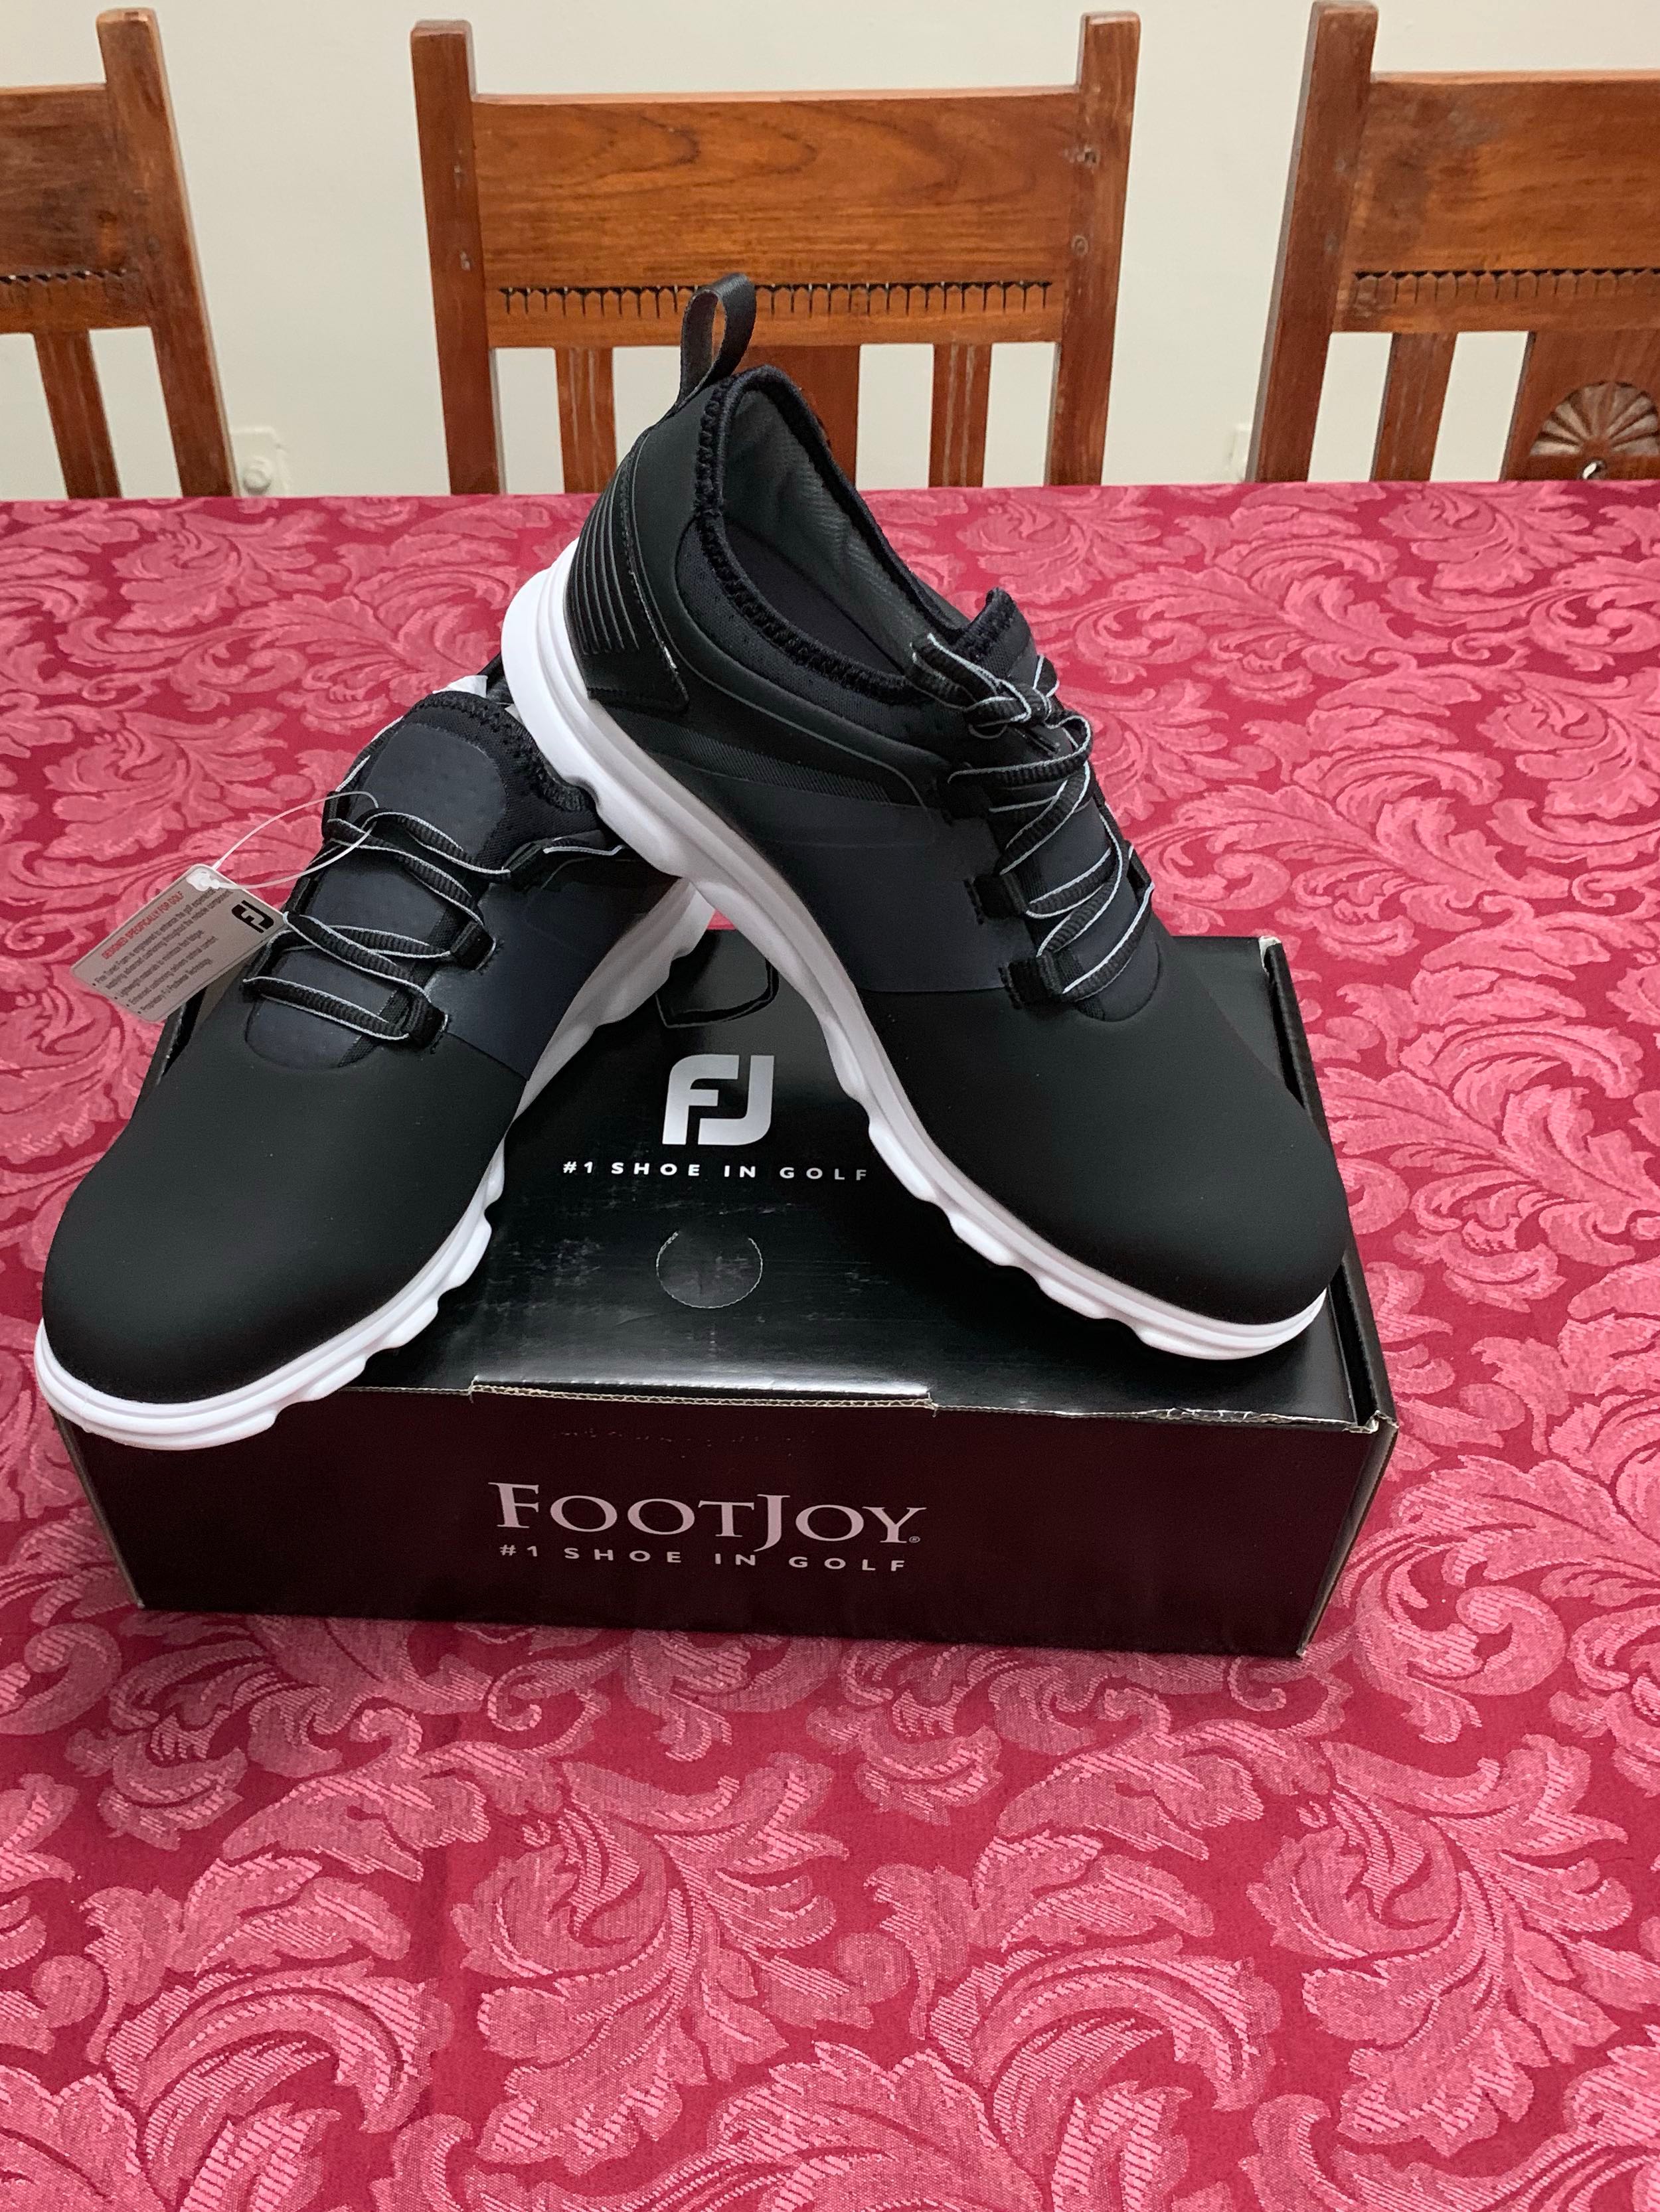 footjoy superlites xp golf shoes